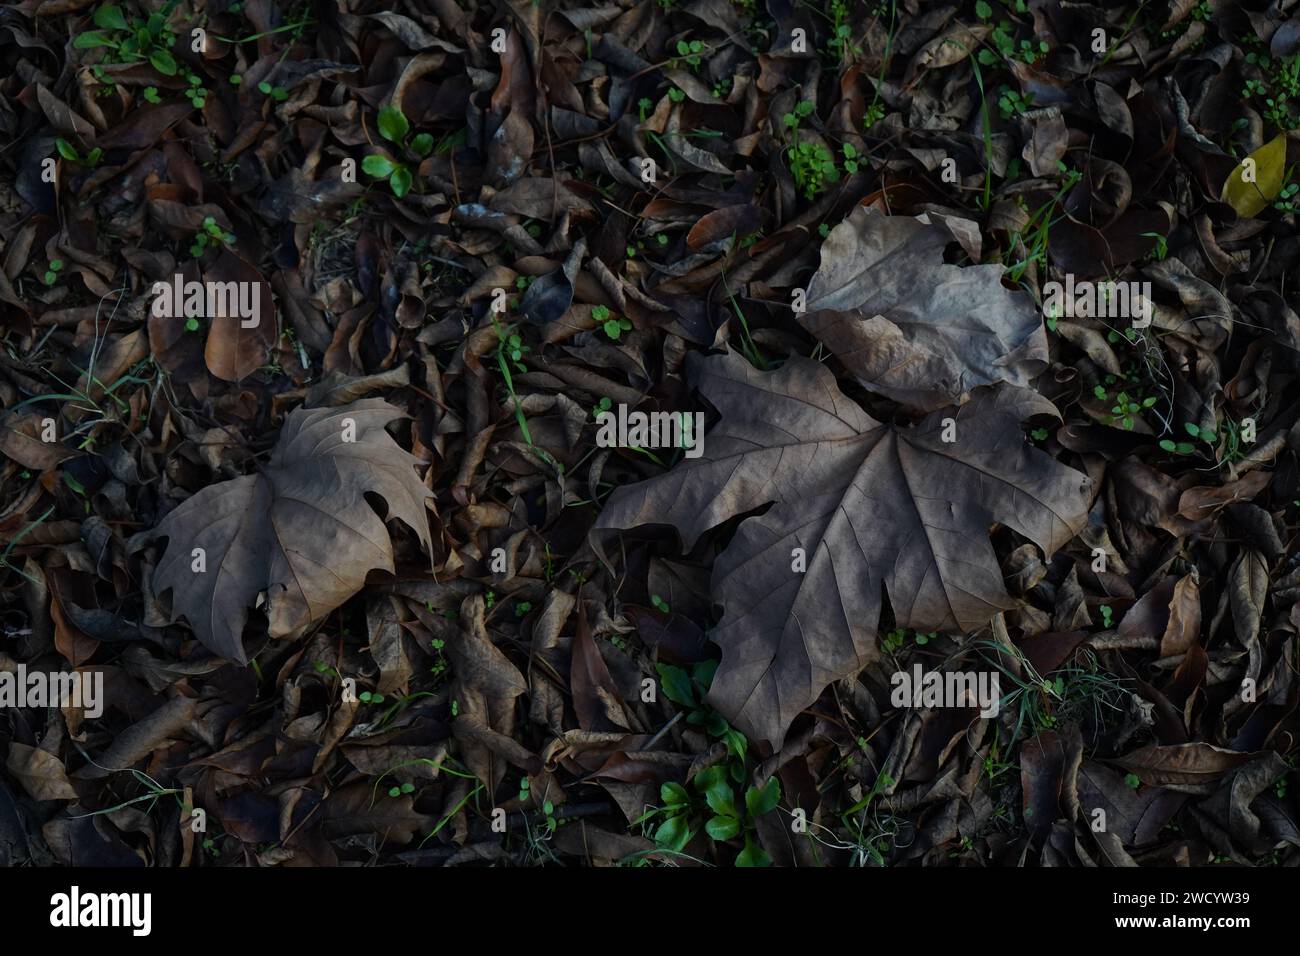 Fallen leaves of London plane, or London plane tree(Platanus × acerifolia, Platanus × hispanica). Autumn scene with fallen leaves and grass. Stock Photo